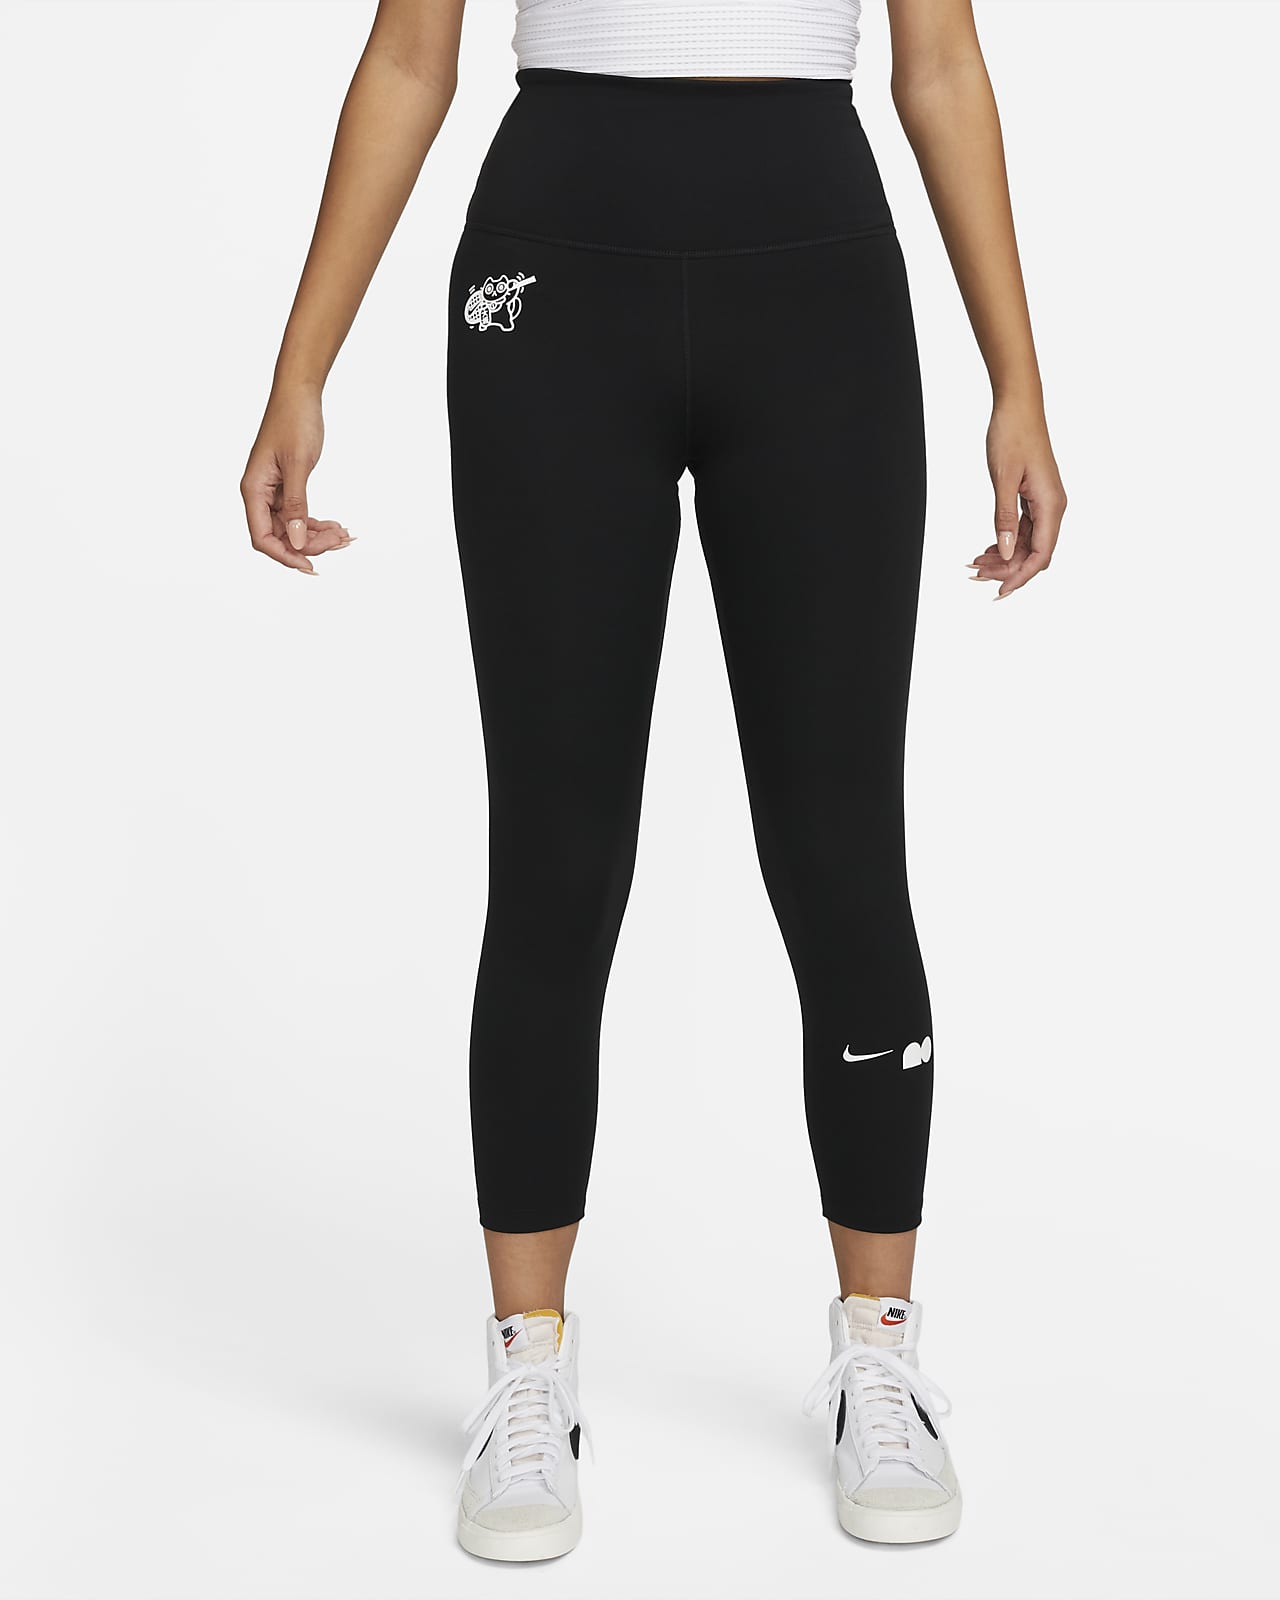 Naomi Osaka Women's High-Waisted Cropped Training Leggings. Nike NL